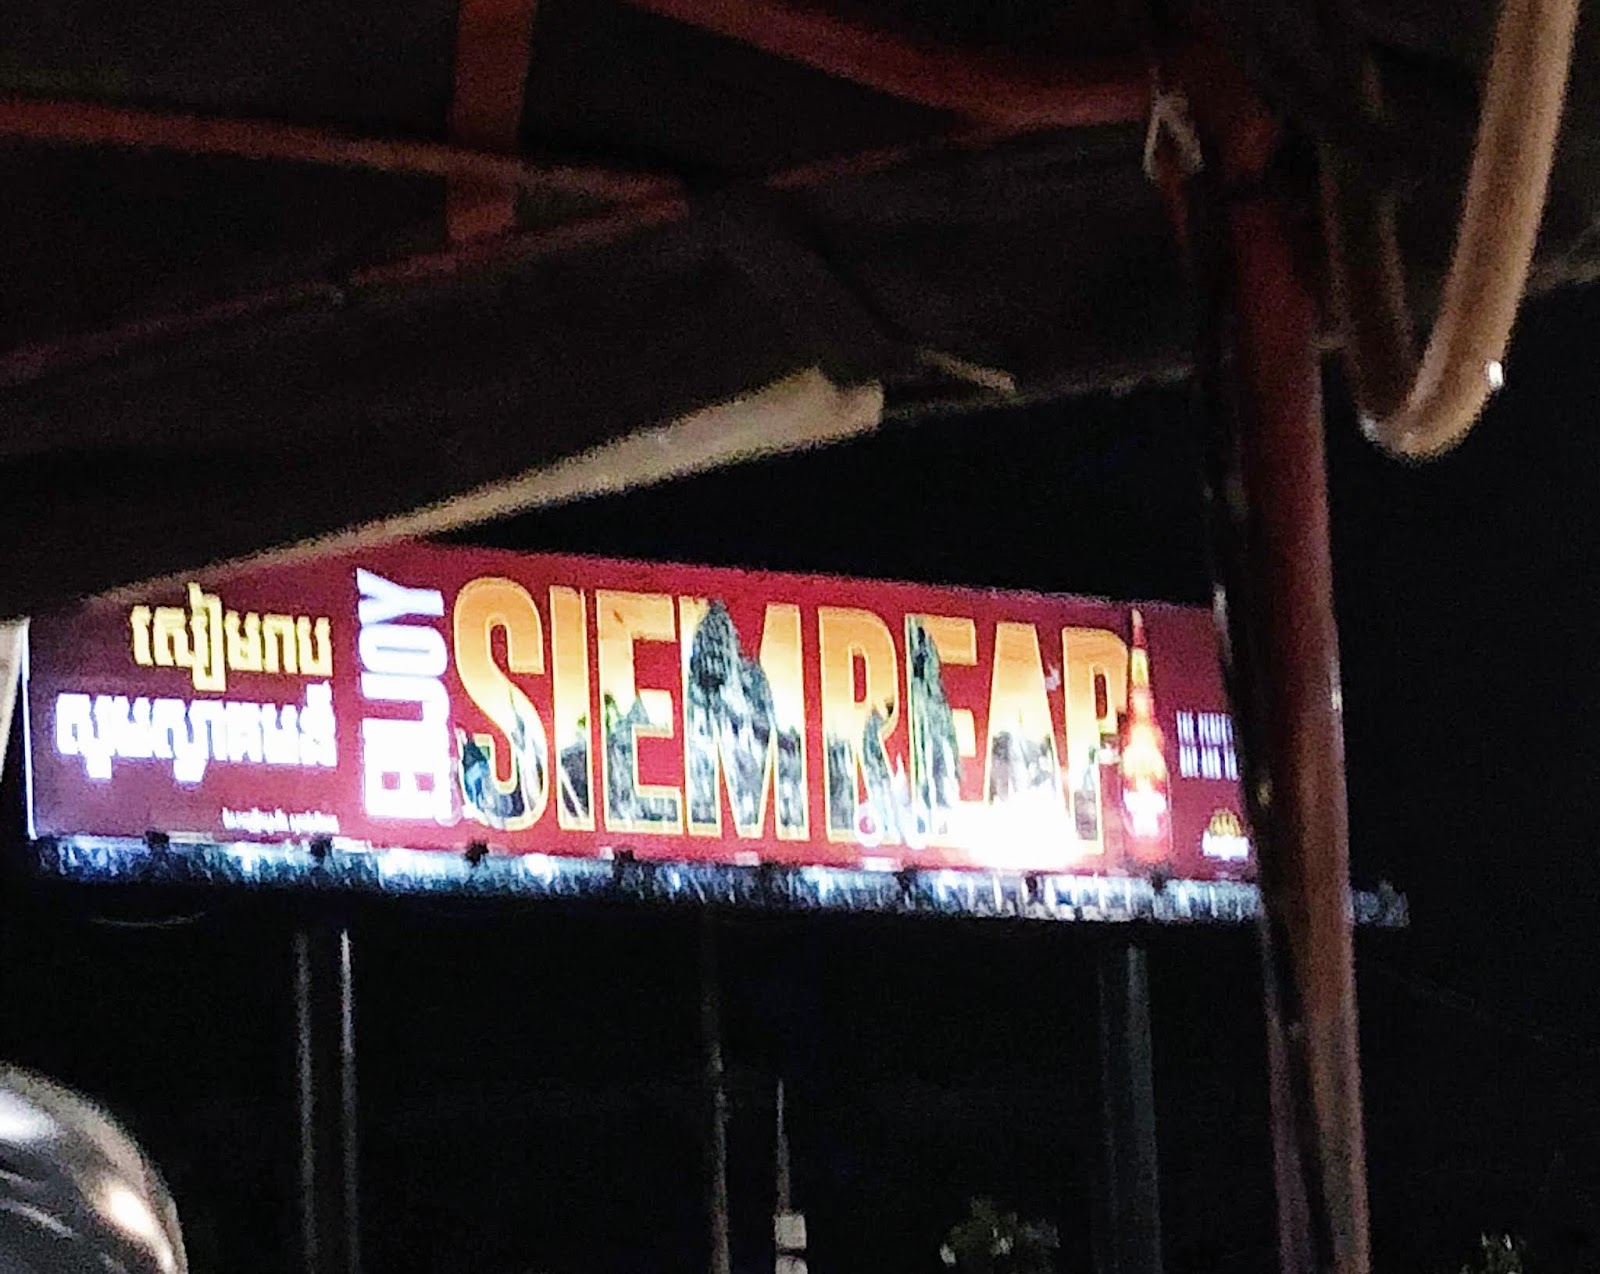 Siem Reap sign in Siem Reap International Airport